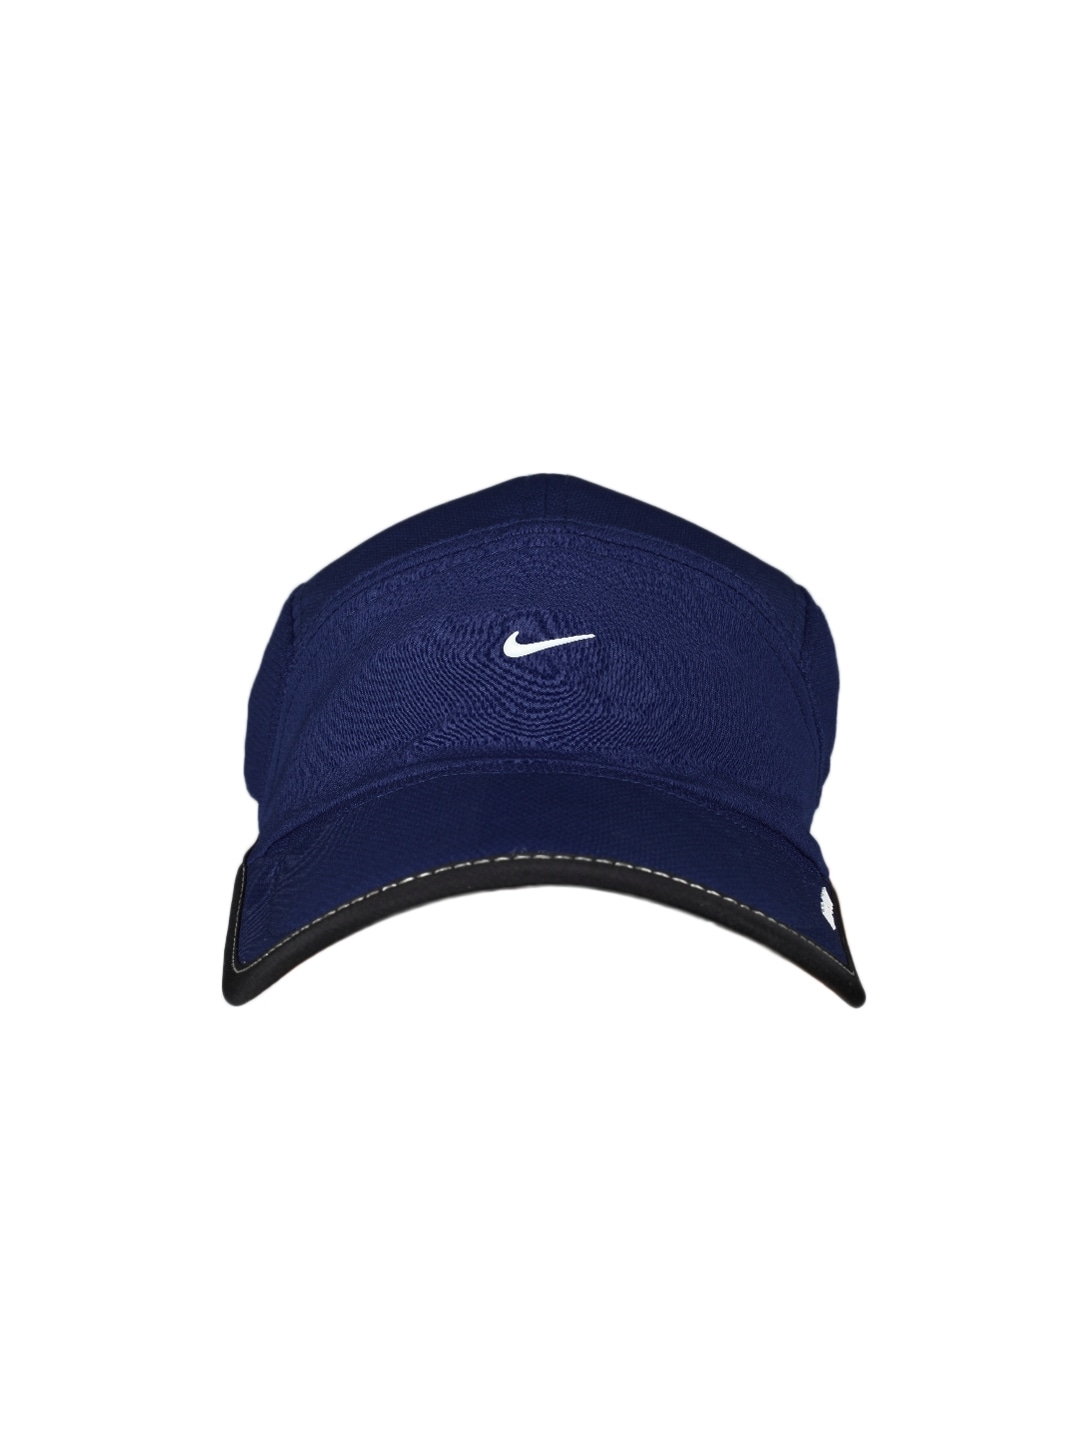 Nike Unisex Blue Daybreak Cap